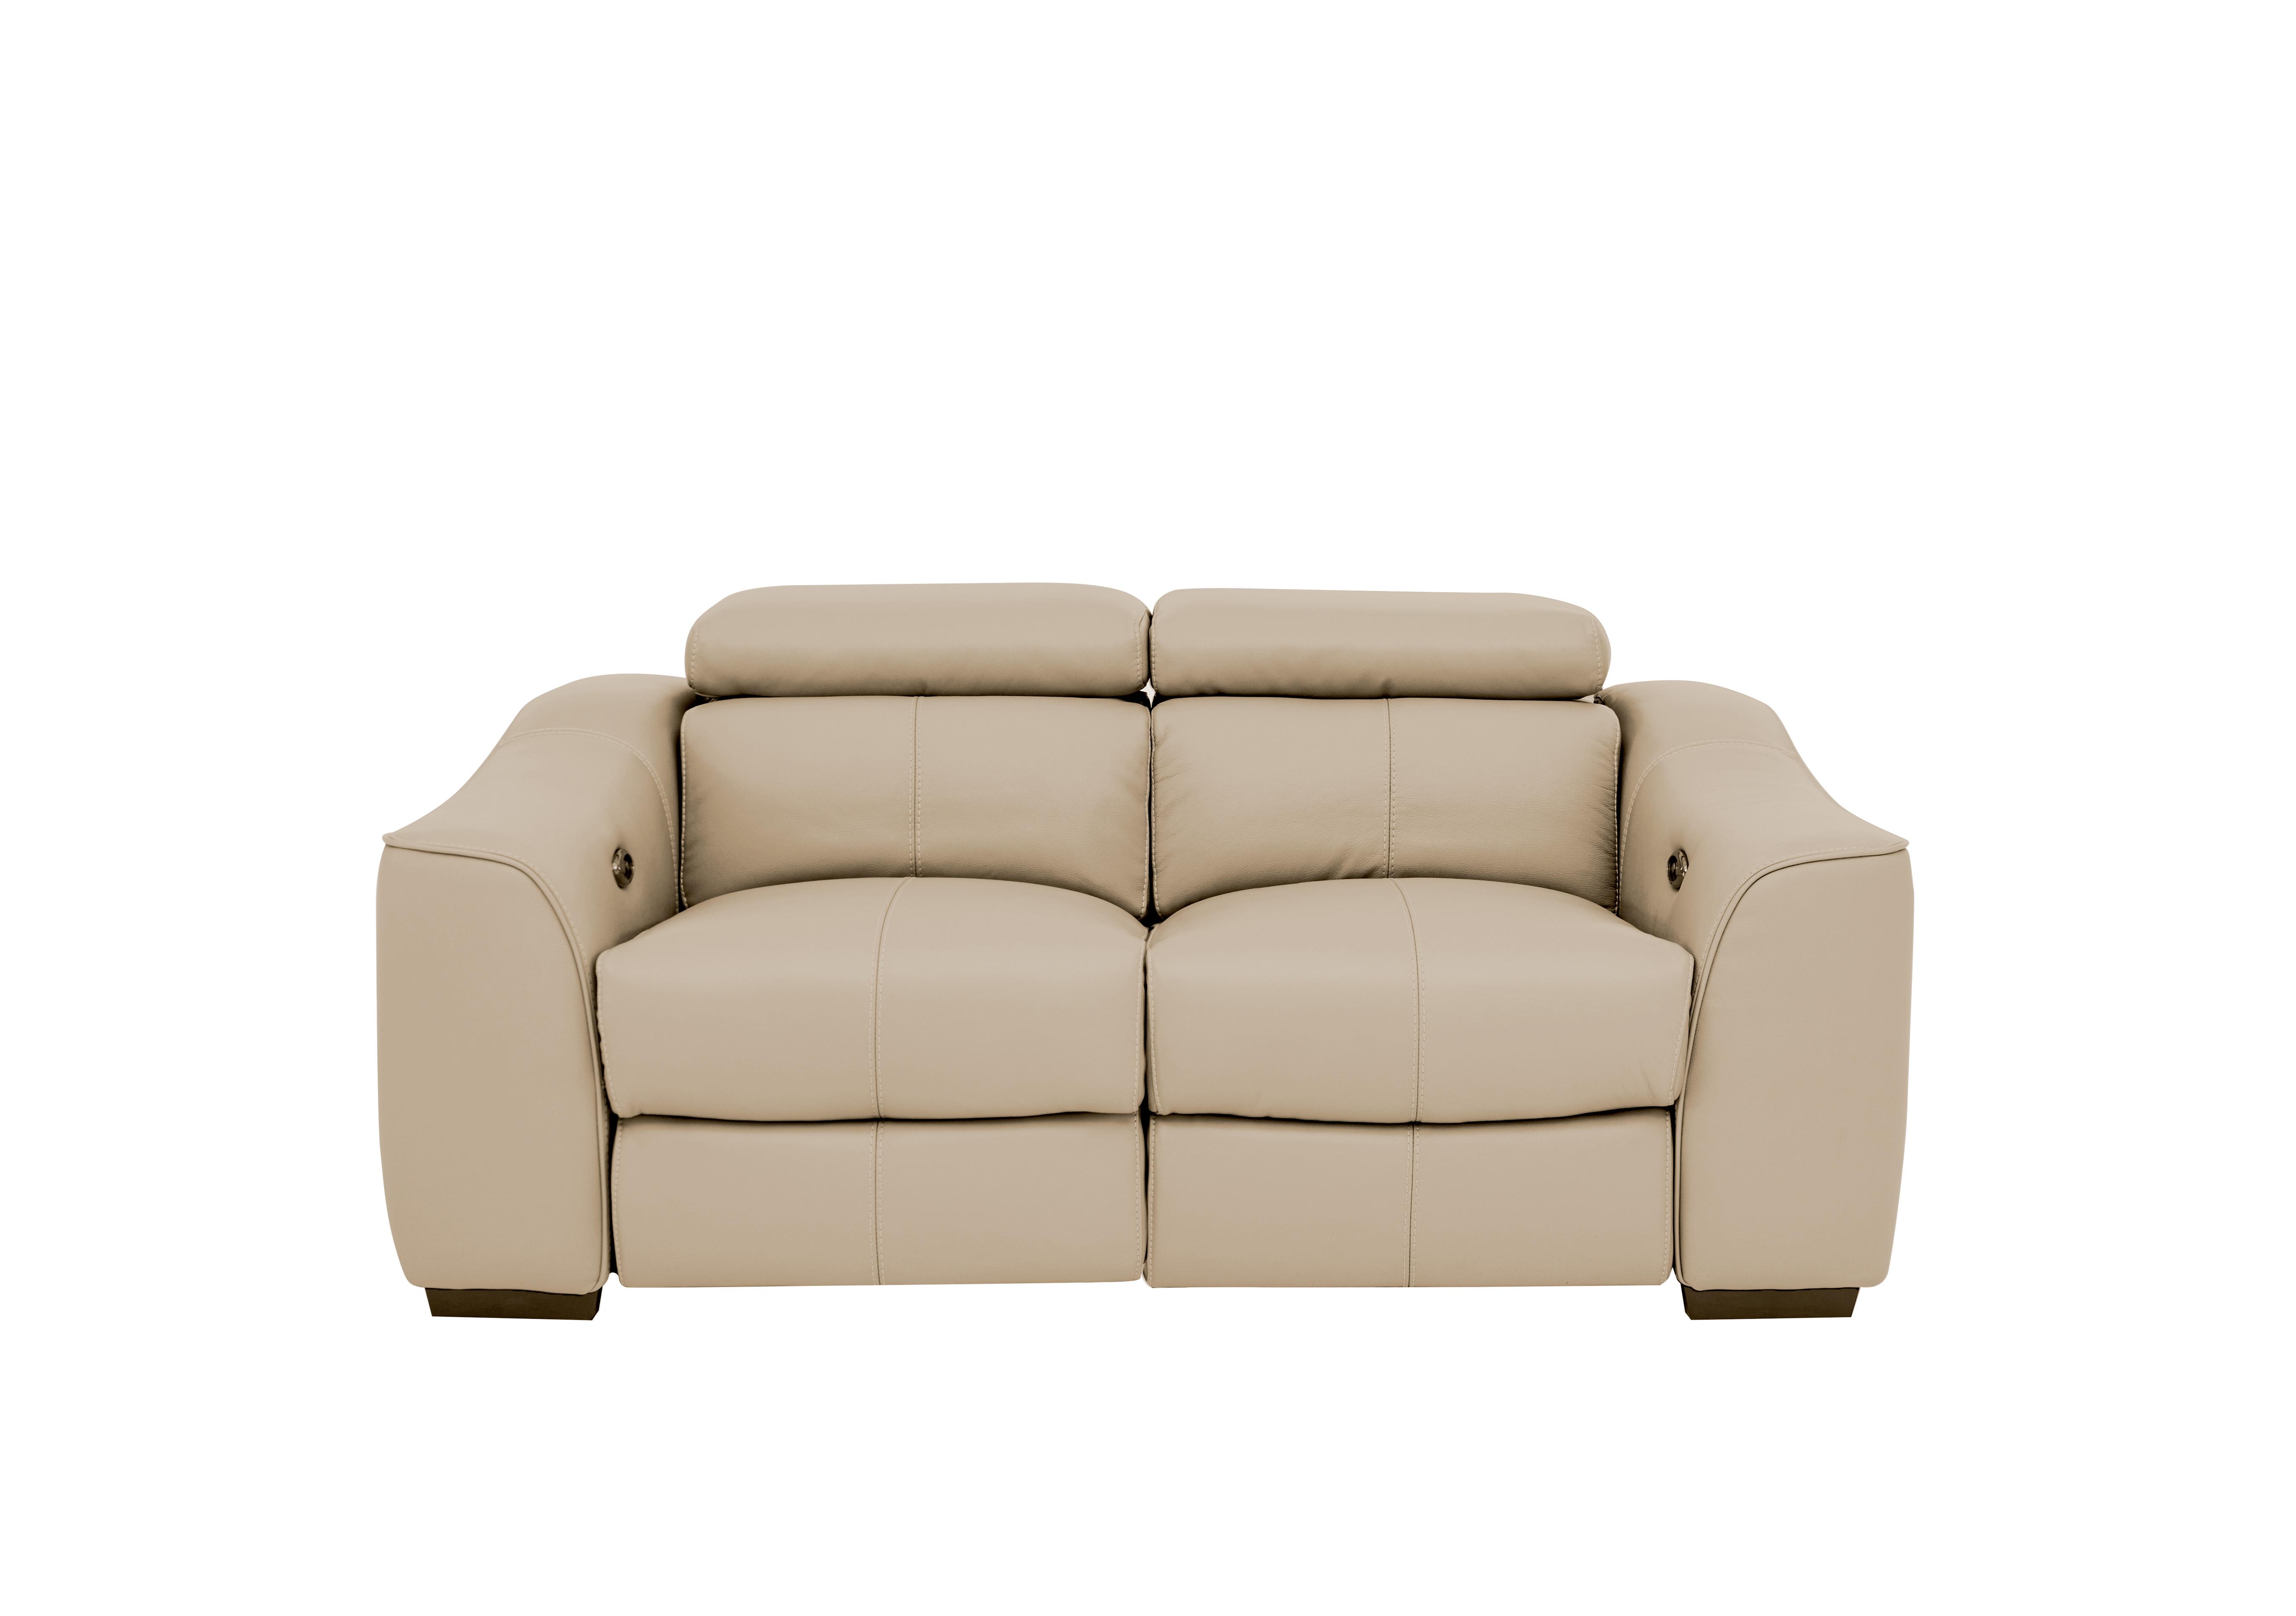 Elixir 2 Seater Leather Sofa in Bv-039c Pebble on Furniture Village